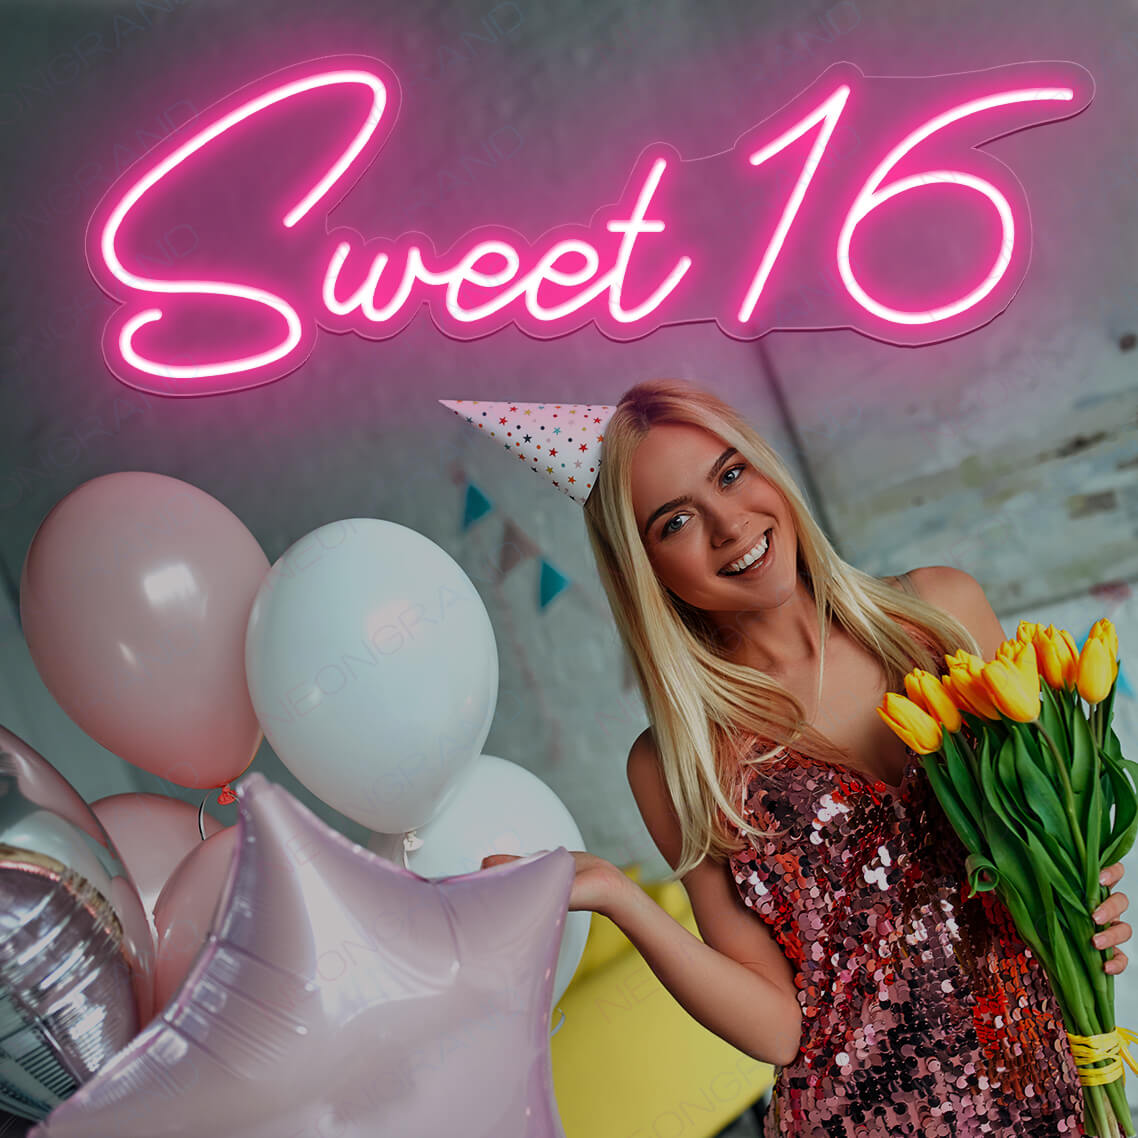 Sweet 16 Neon Sign Happy Birthday Led Light pink 1